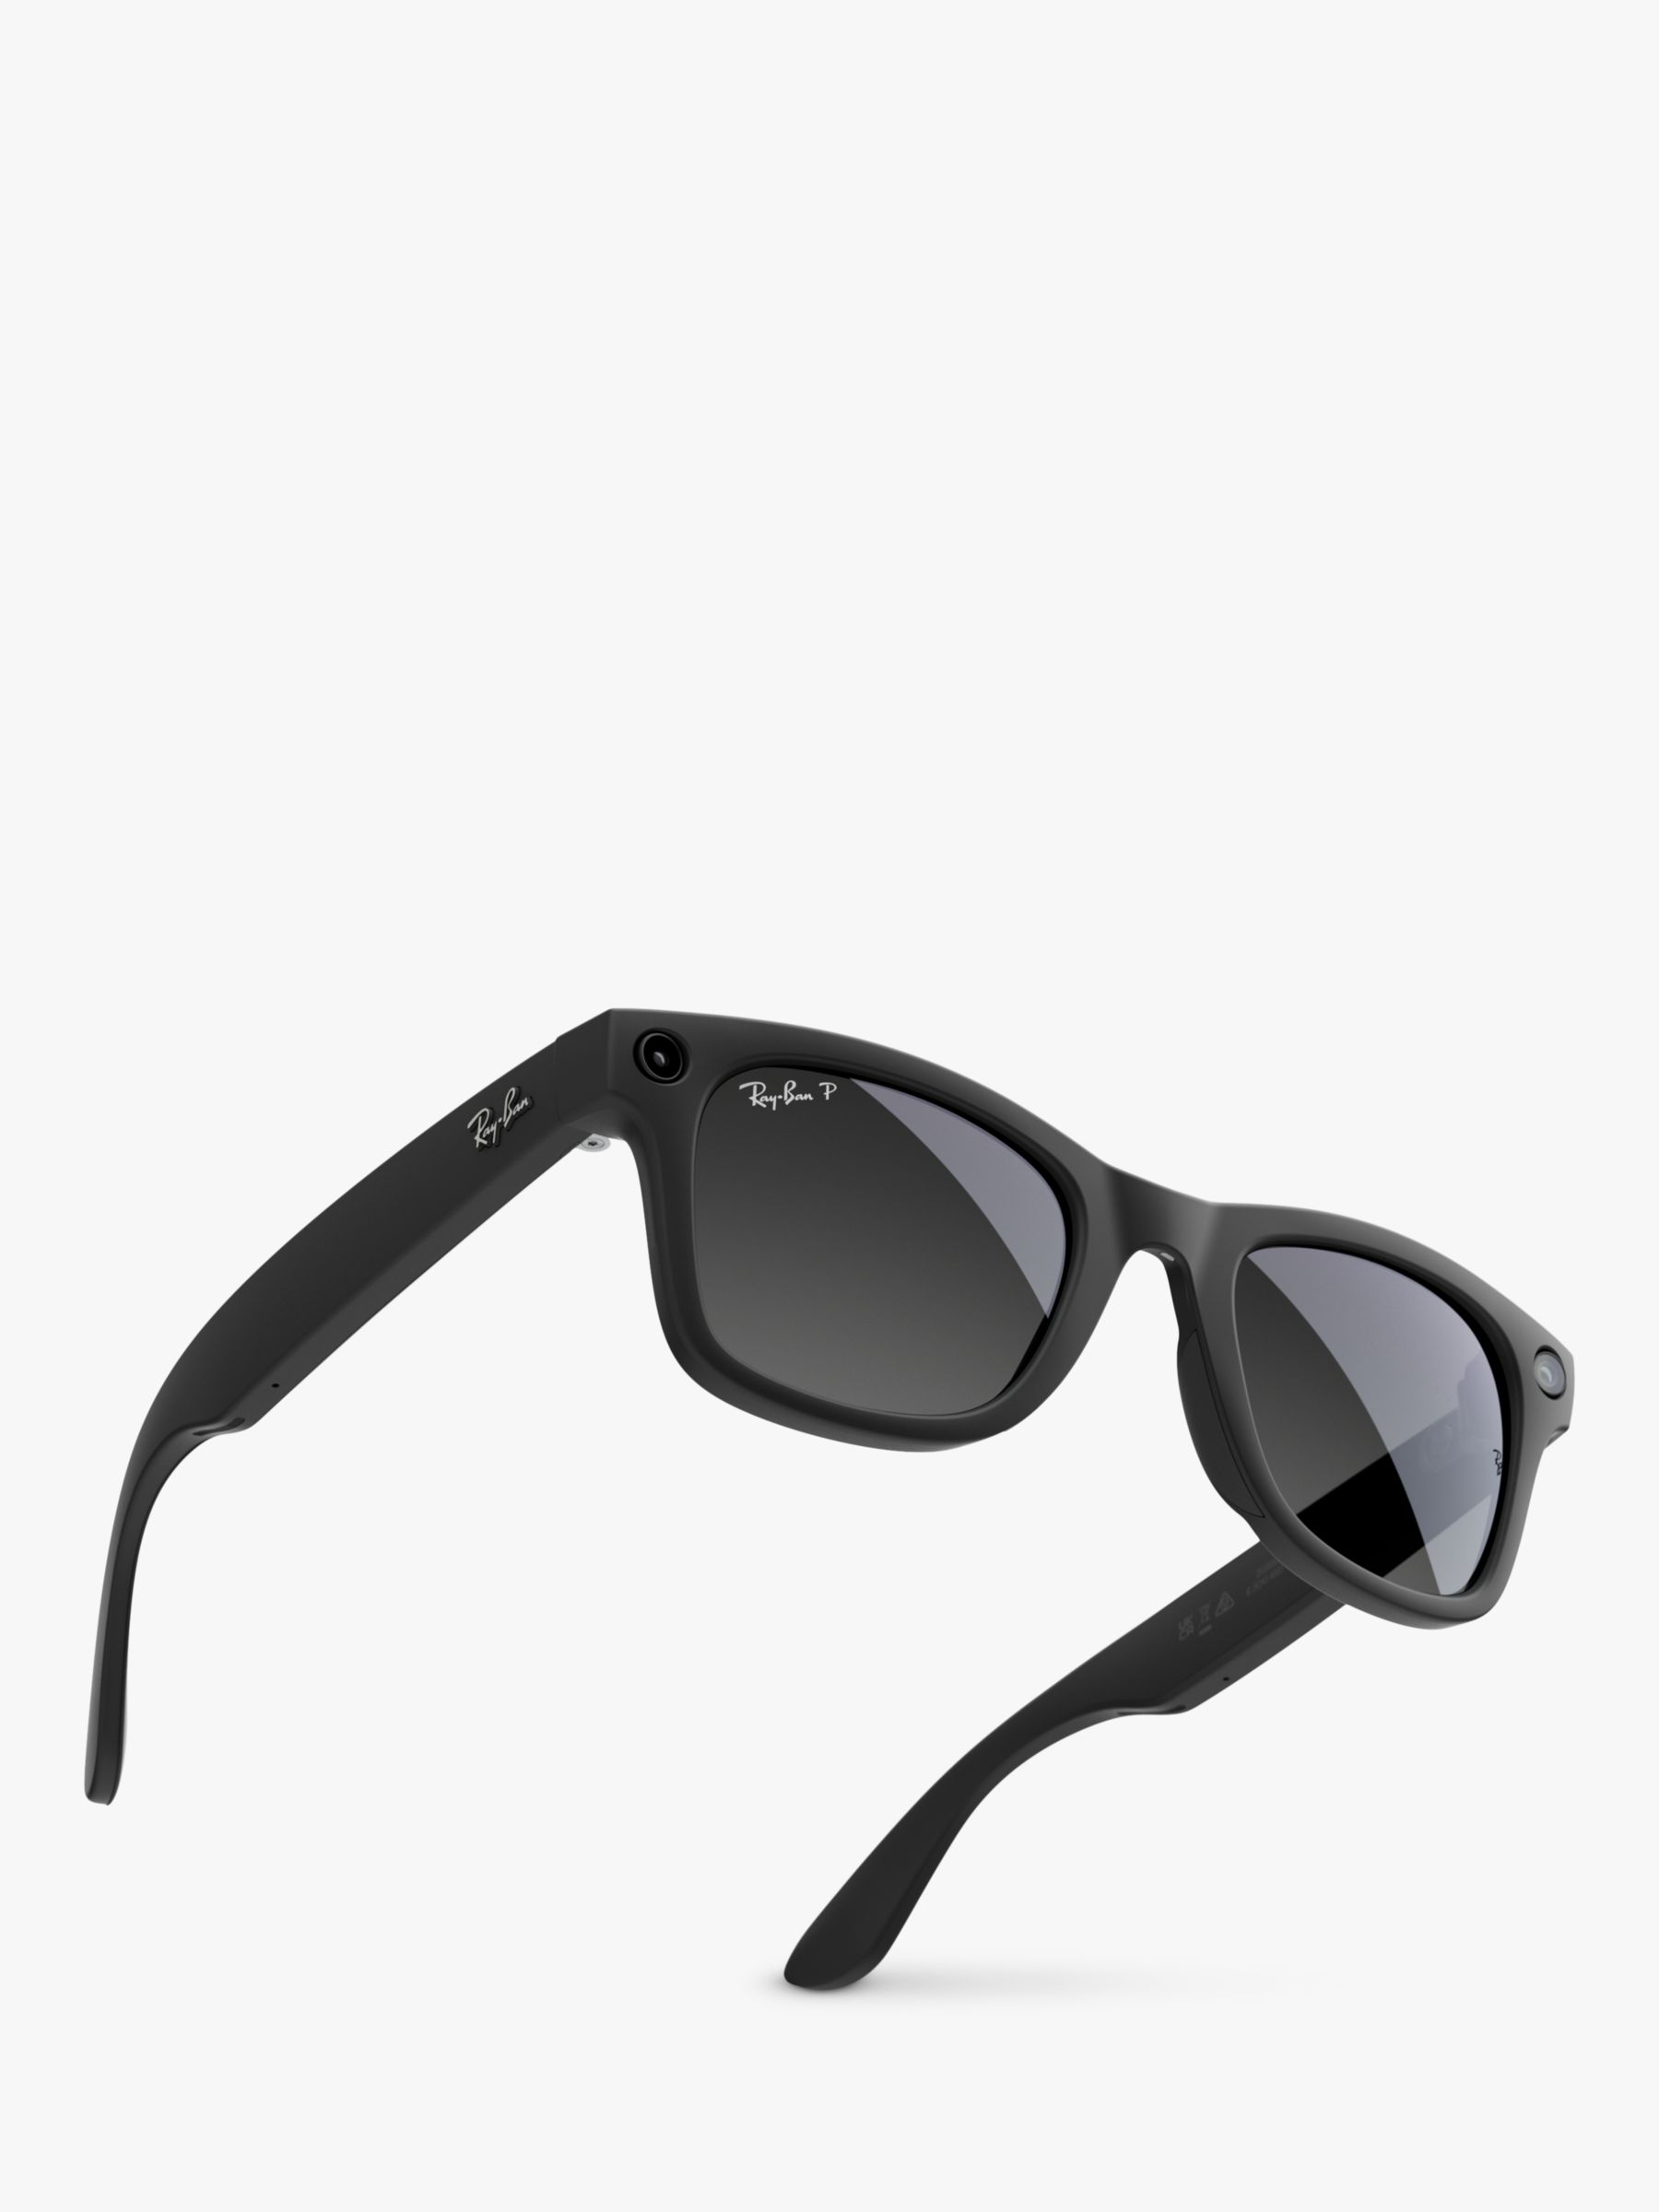 Ray-Ban Meta Wayfarer (Large) Smart Glasses, Matte Black, Polarised Graphite Lens